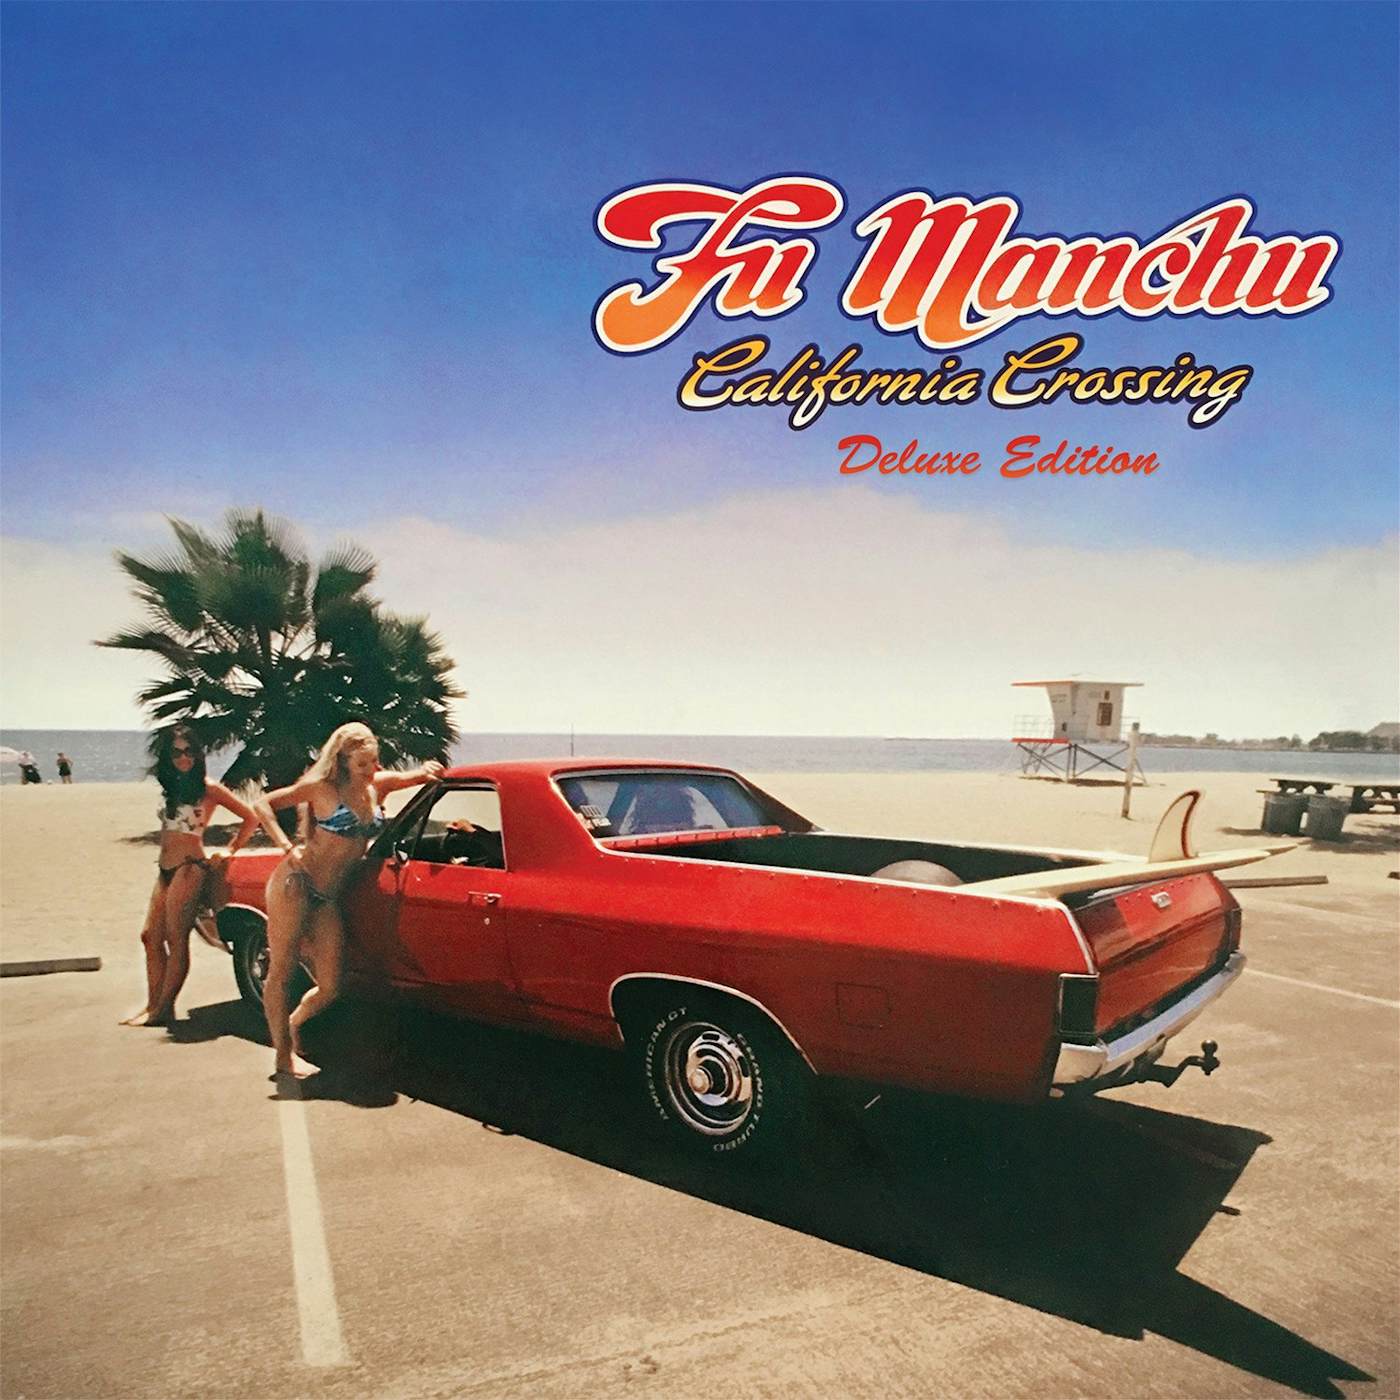 Fu Manchu 'California Crossing' Vinyl 3xLP Yellow/Blue/Red Vinyl Record